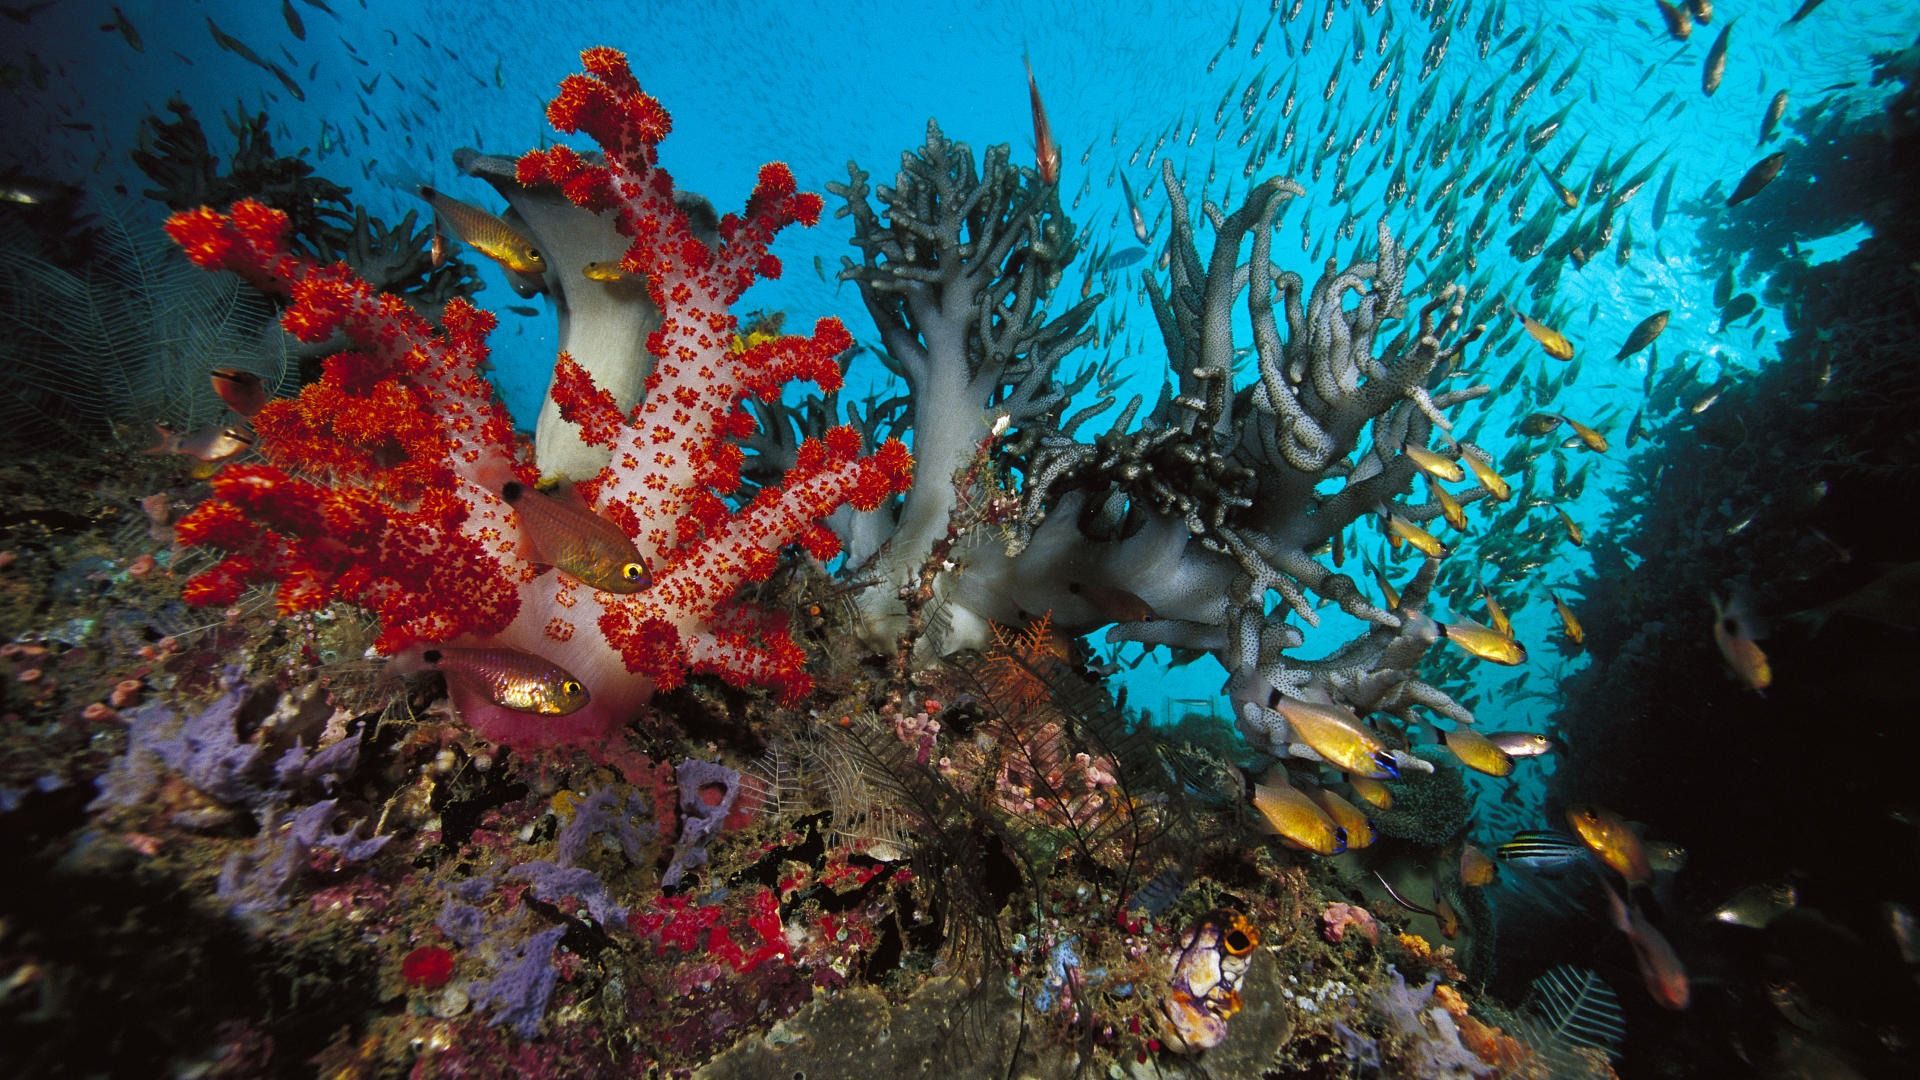 Wallpapers Reef Fish Hd Widescreen Bahamas 1920x1080 | #627915 #reef